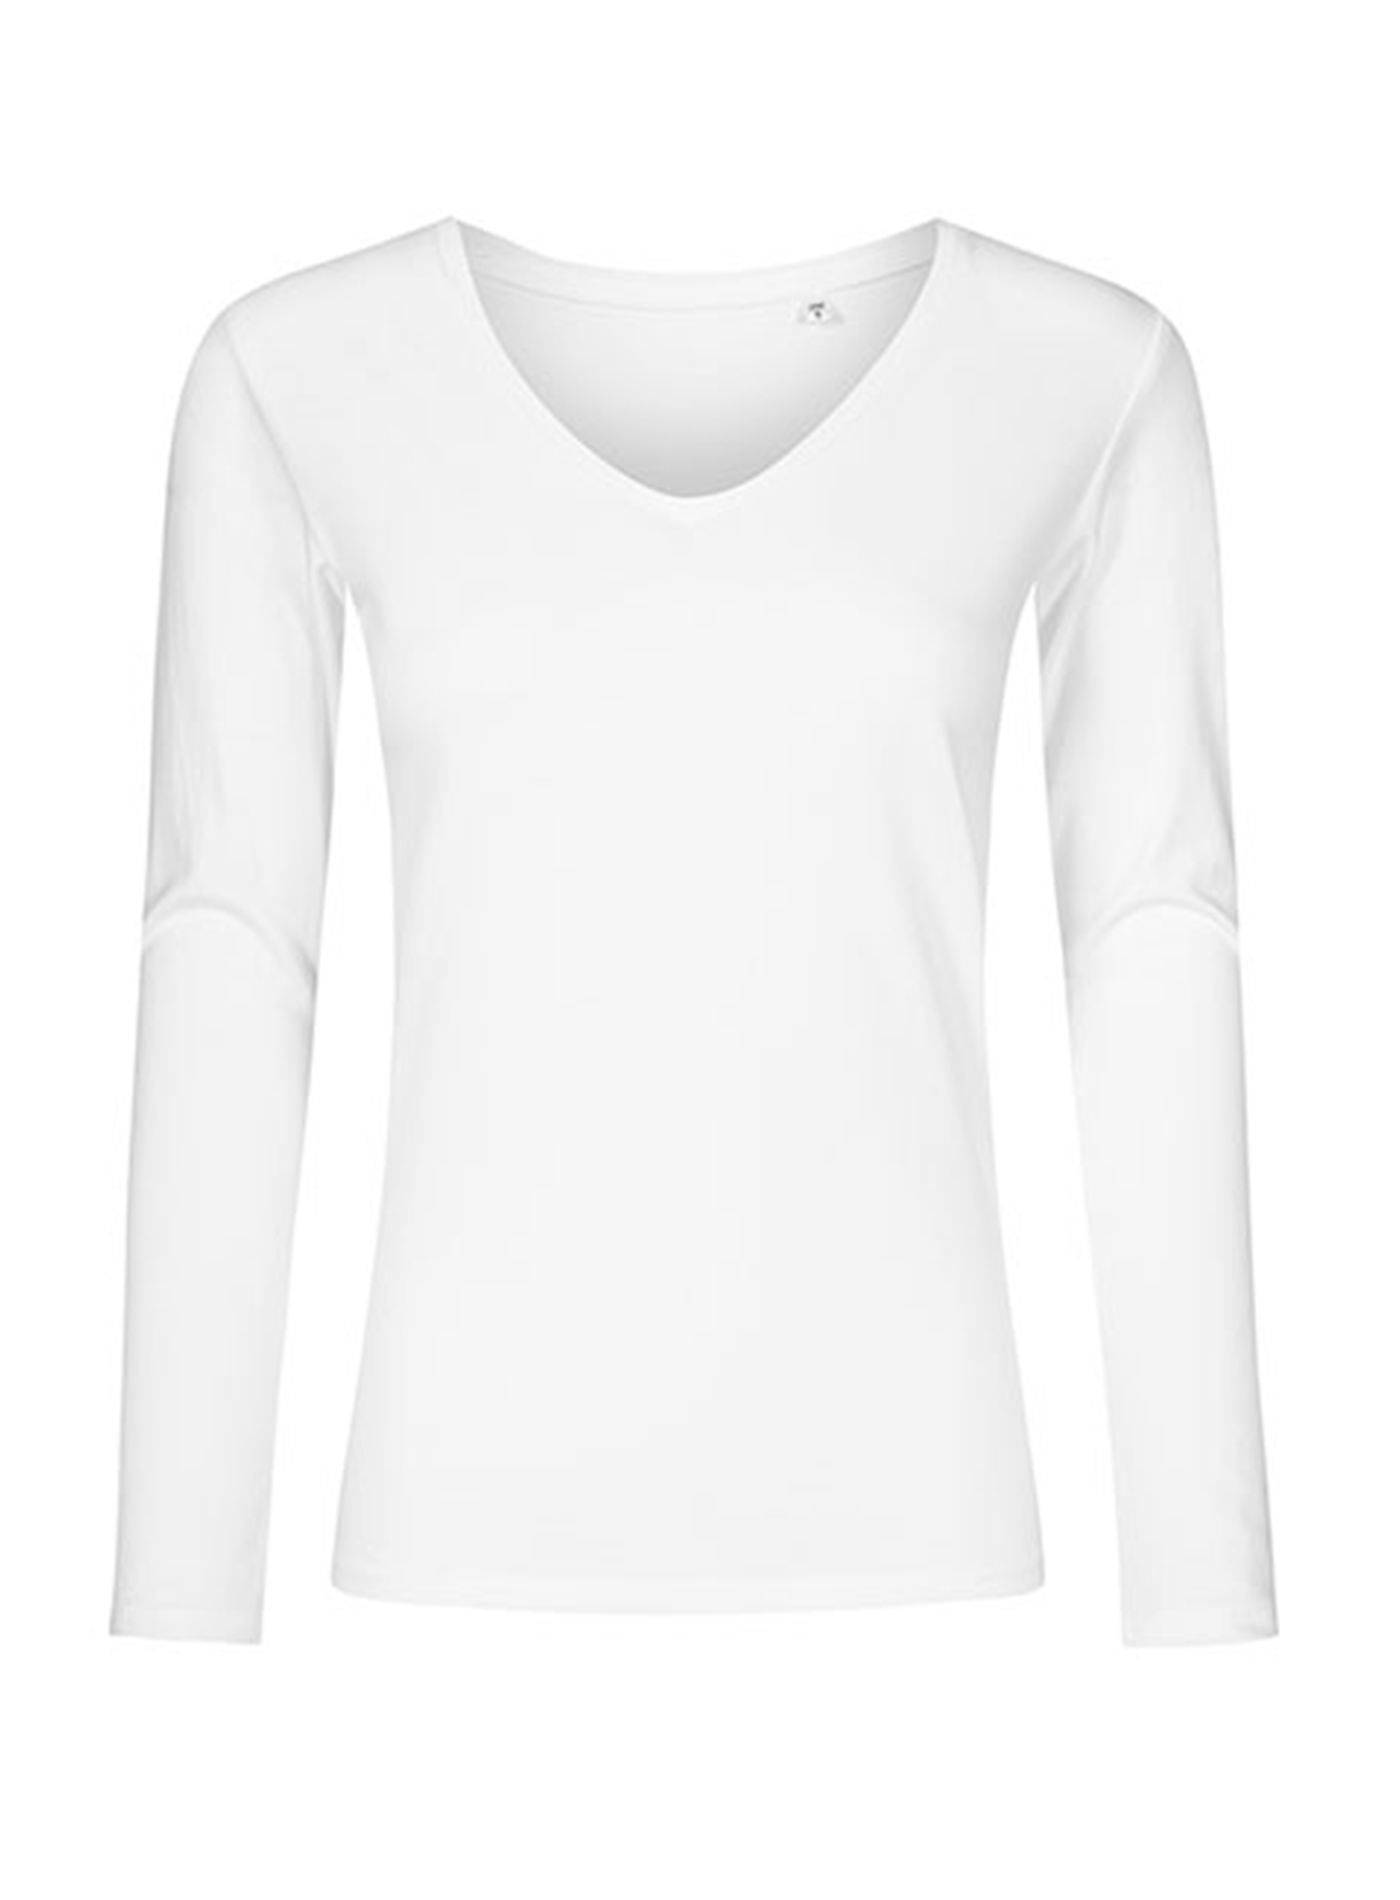 Dámské tričko s dlouhým rukávem a výstřihem do V Promodoro - Bílá XL